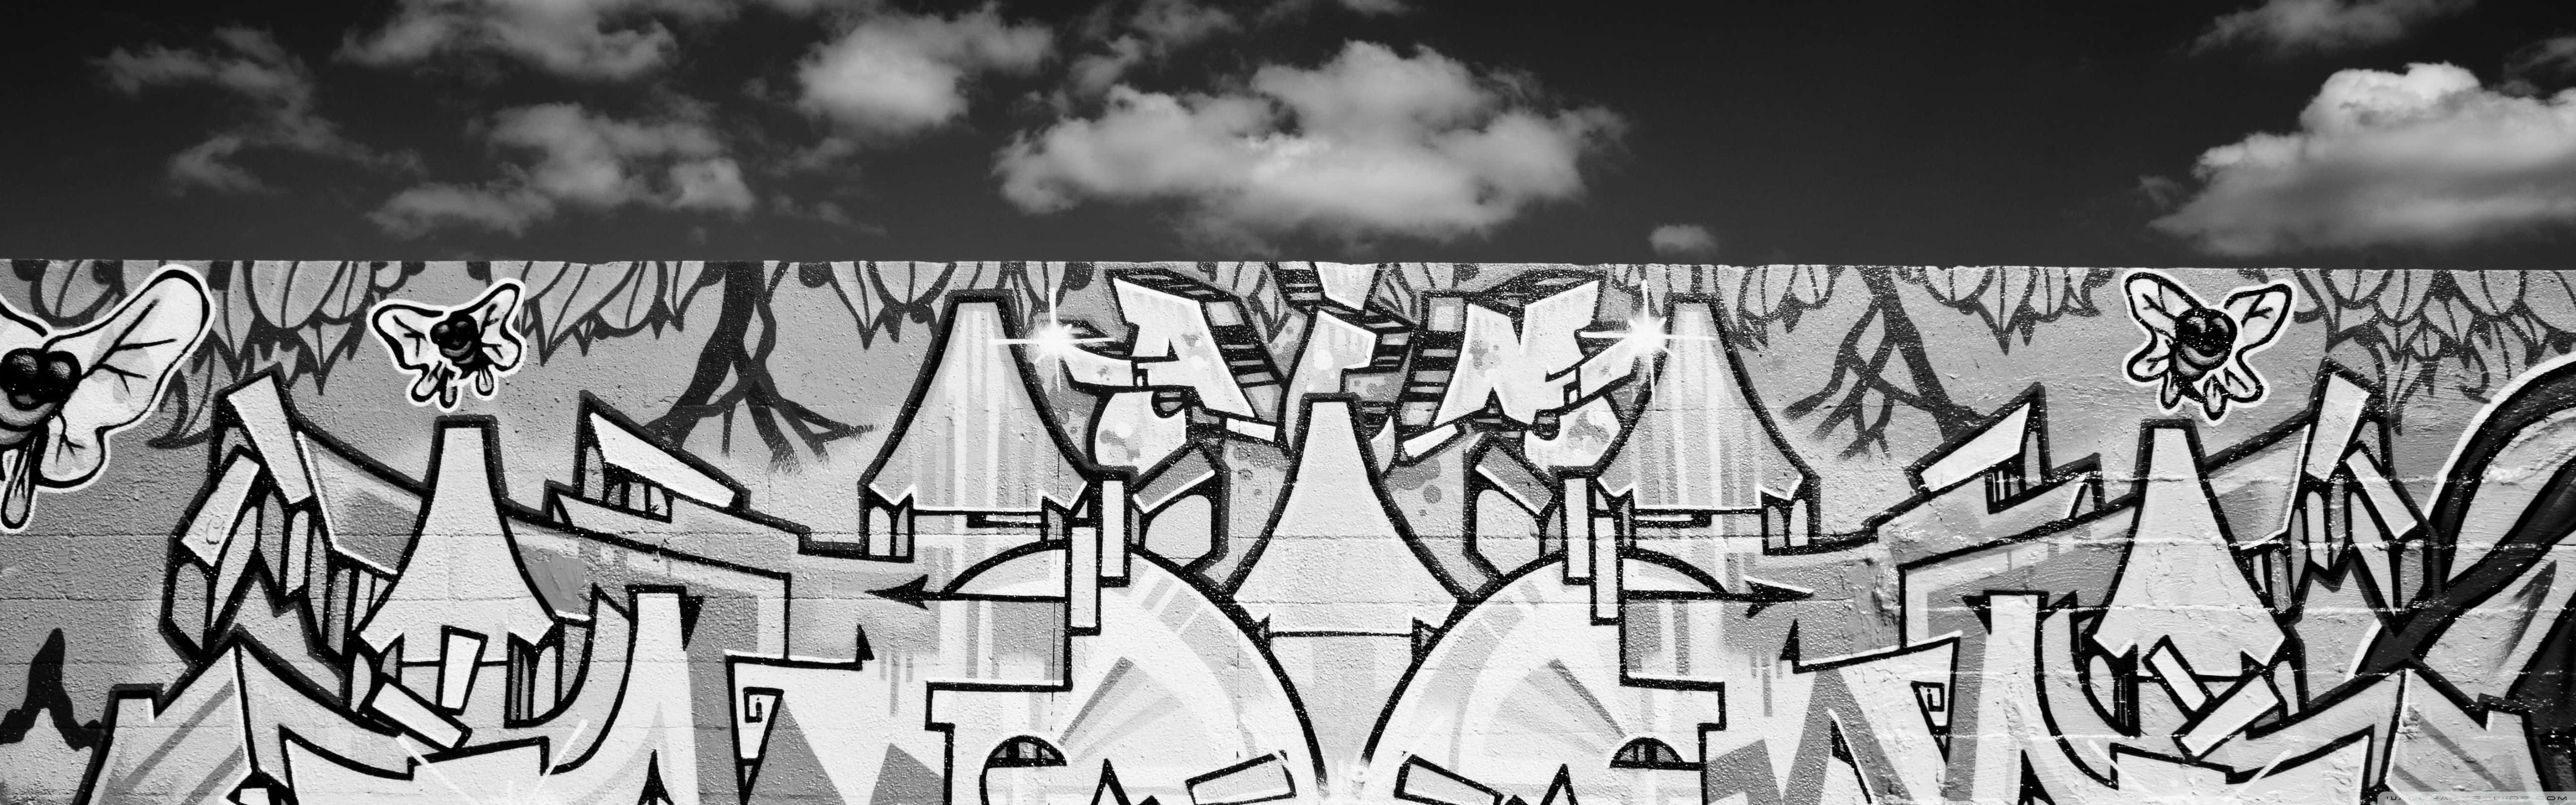 Captivating Monochrome Graffiti Art Wallpaper